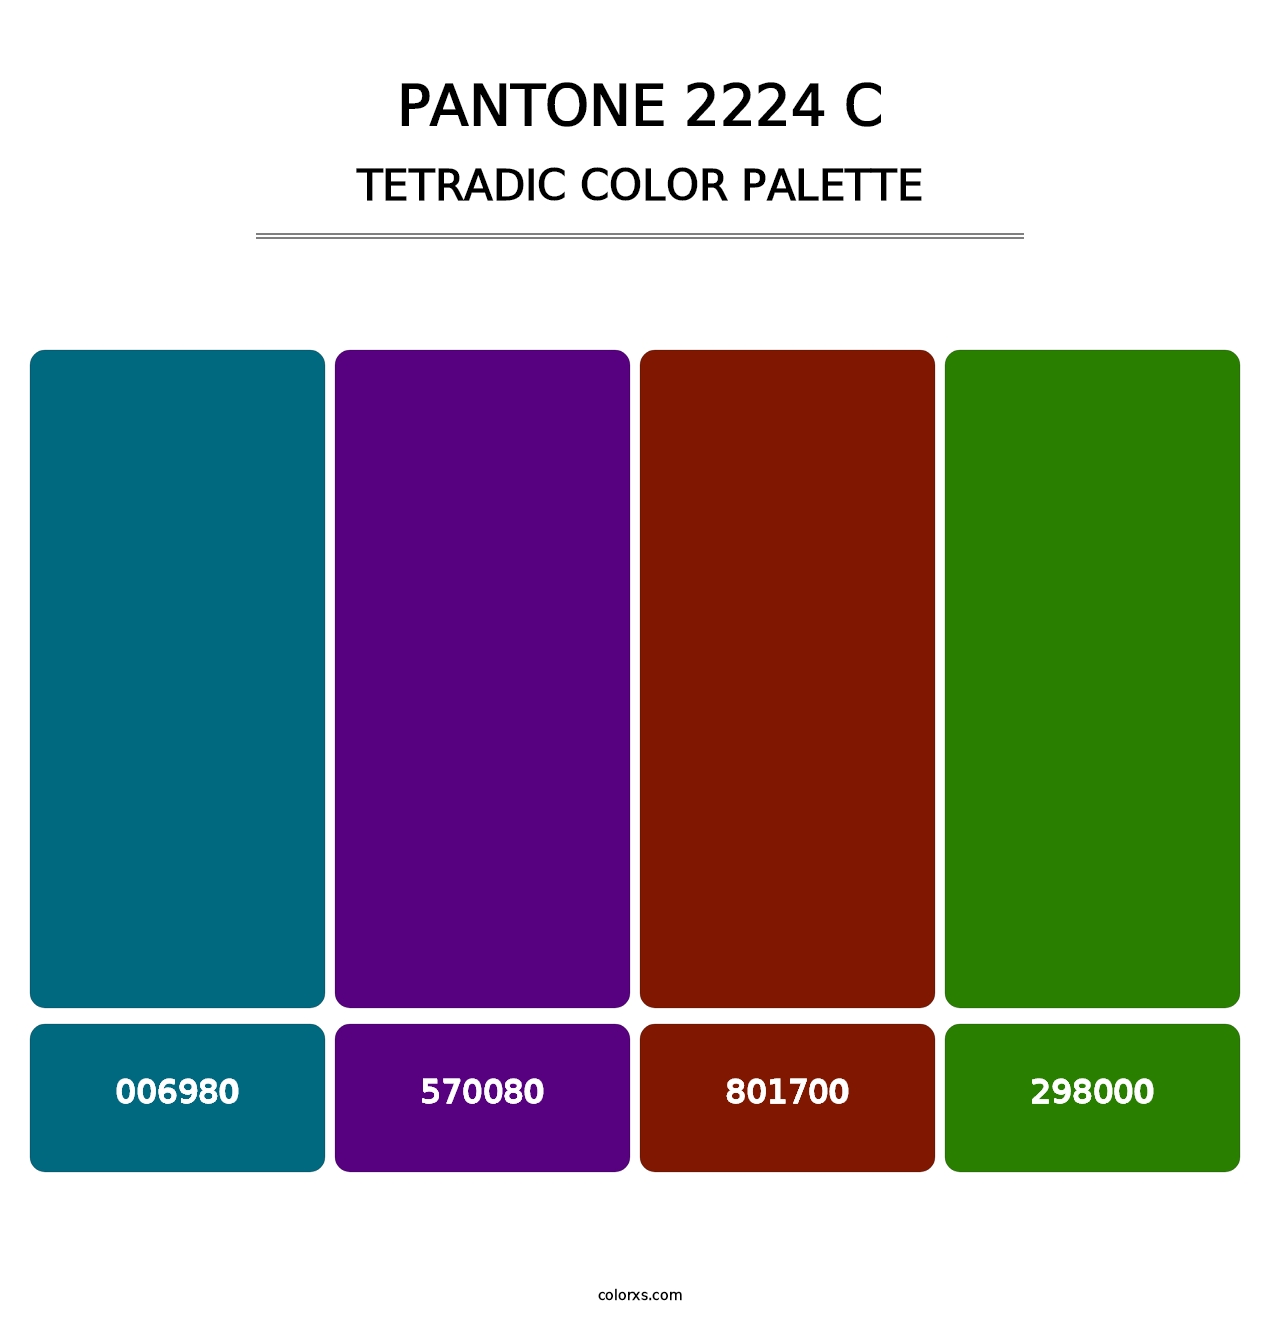 PANTONE 2224 C - Tetradic Color Palette